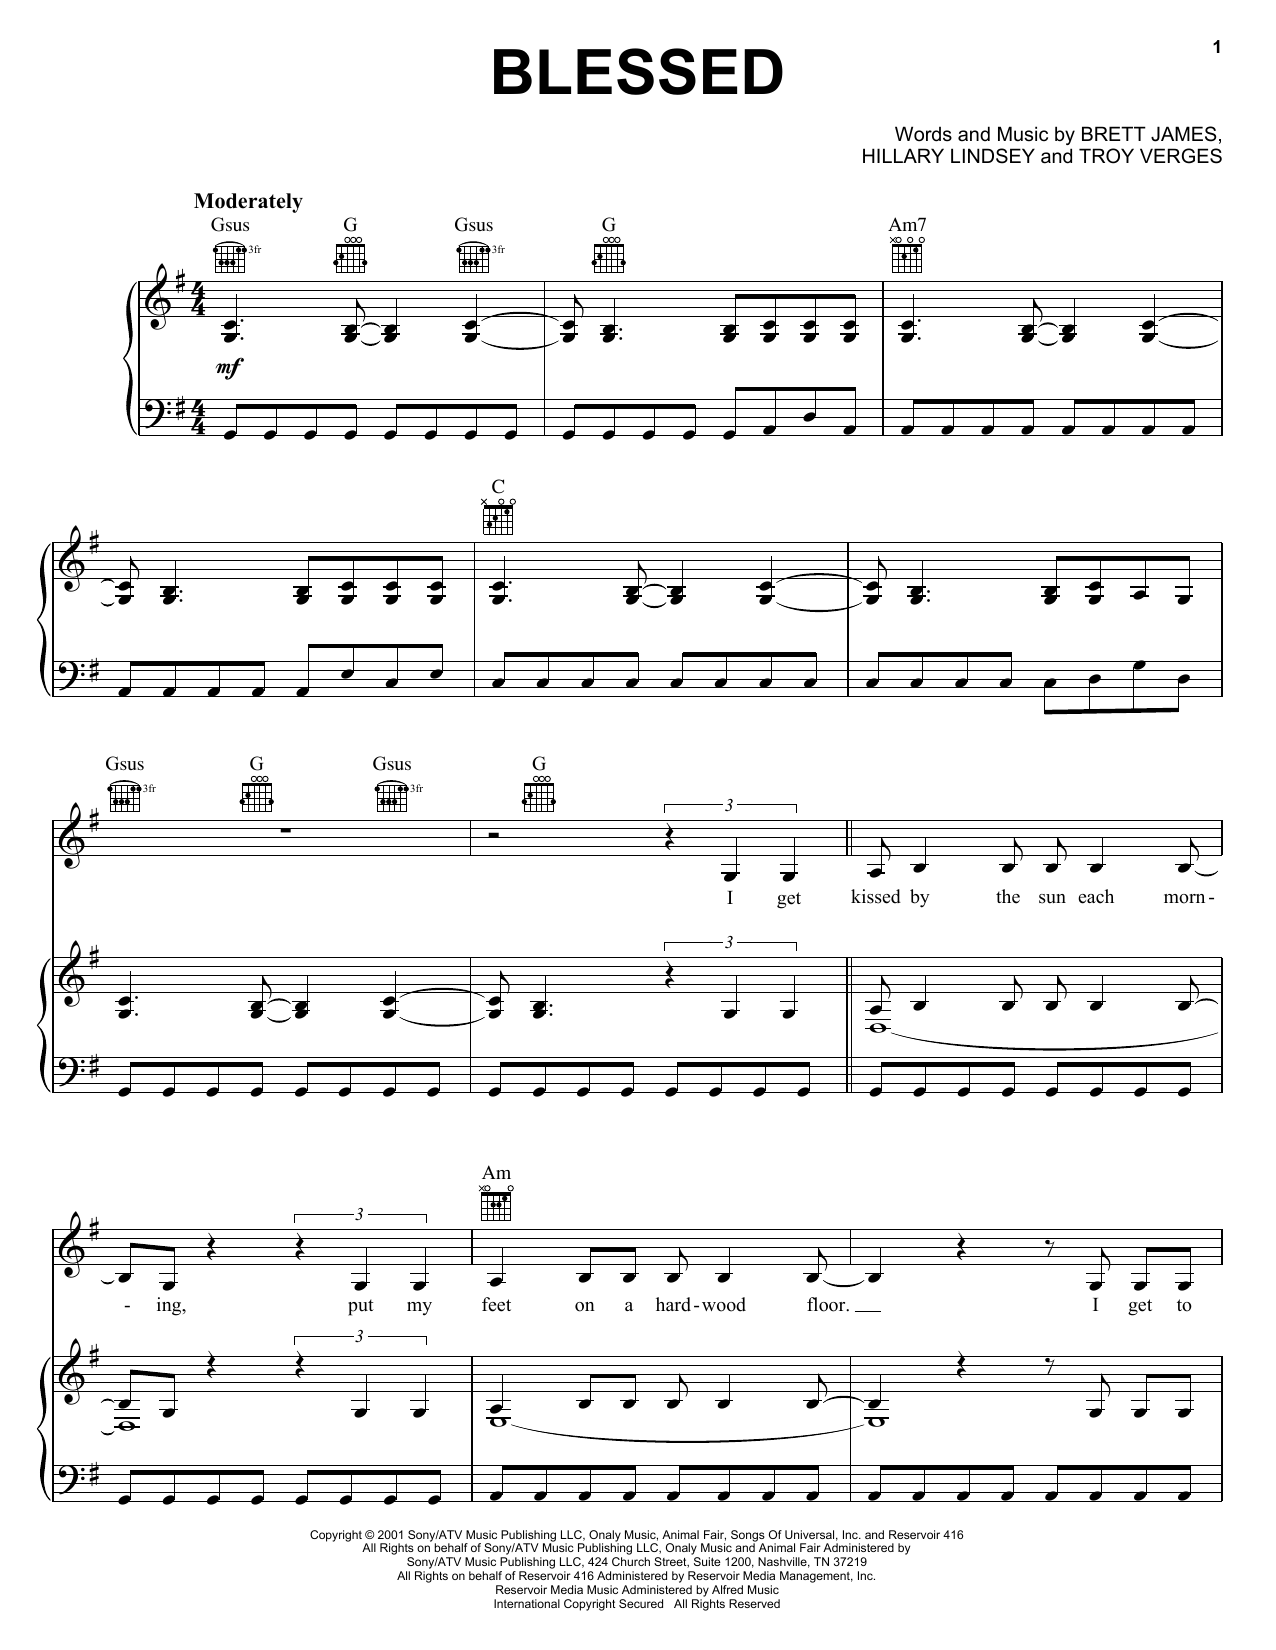 Martina McBride Blessed sheet music notes and chords arranged for Guitar Chords/Lyrics